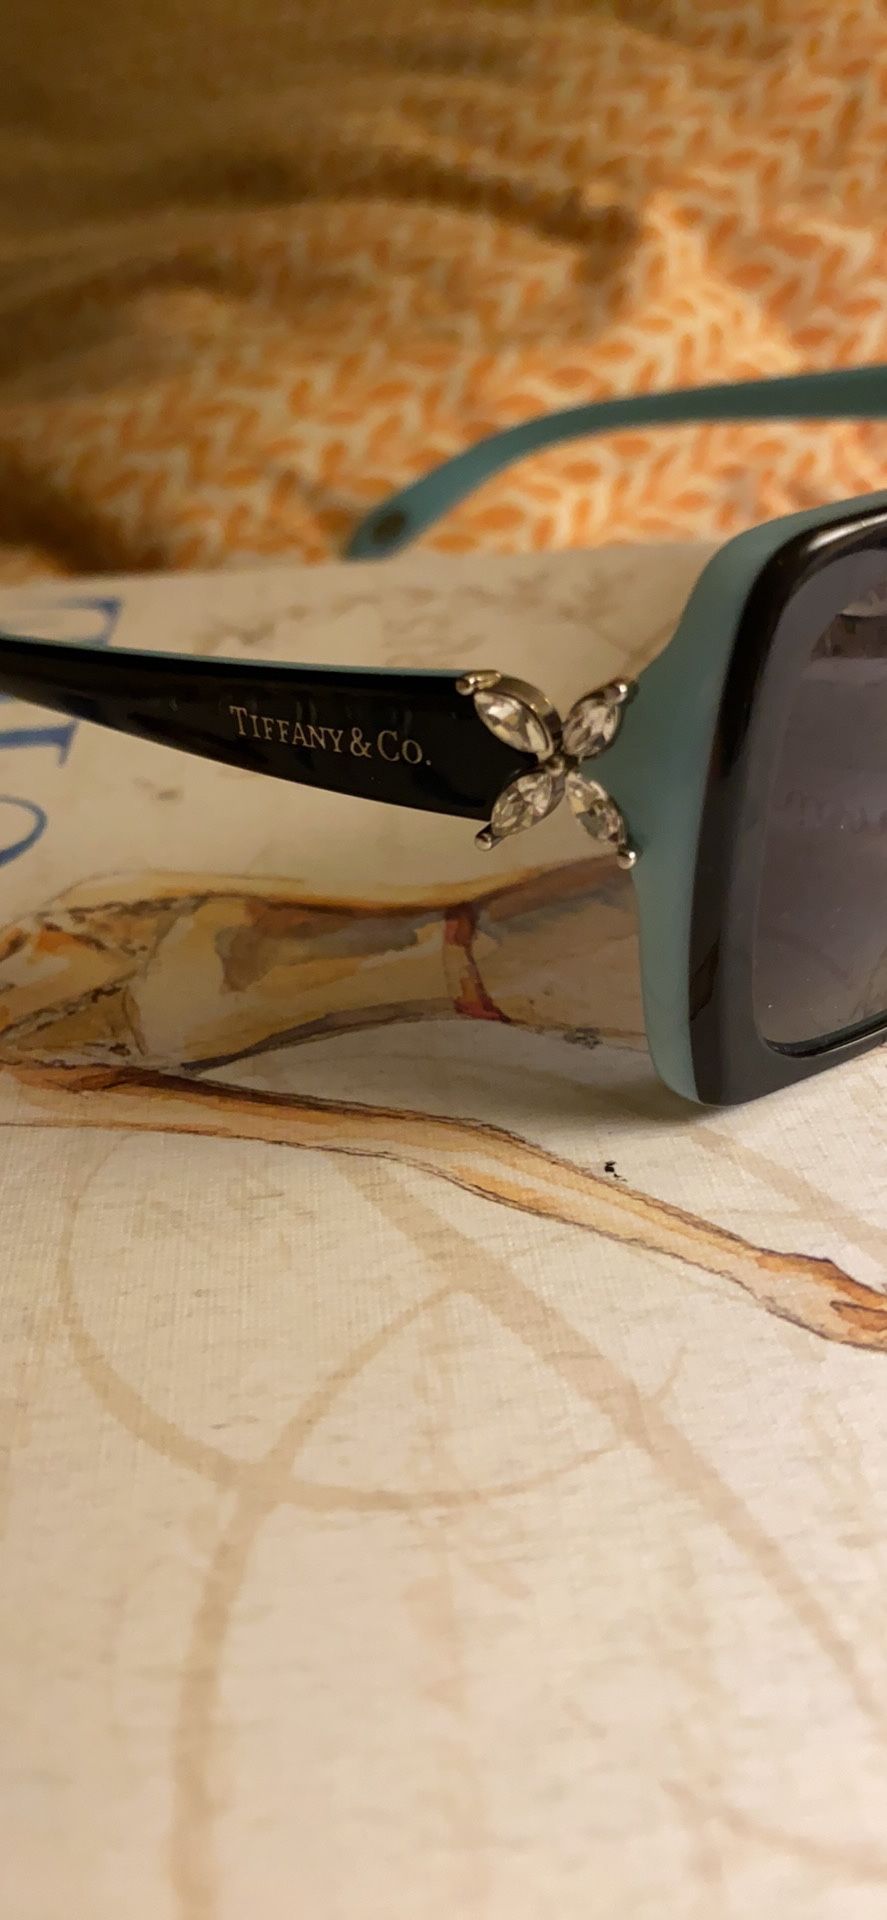 Tiffany and Co. sunglasses